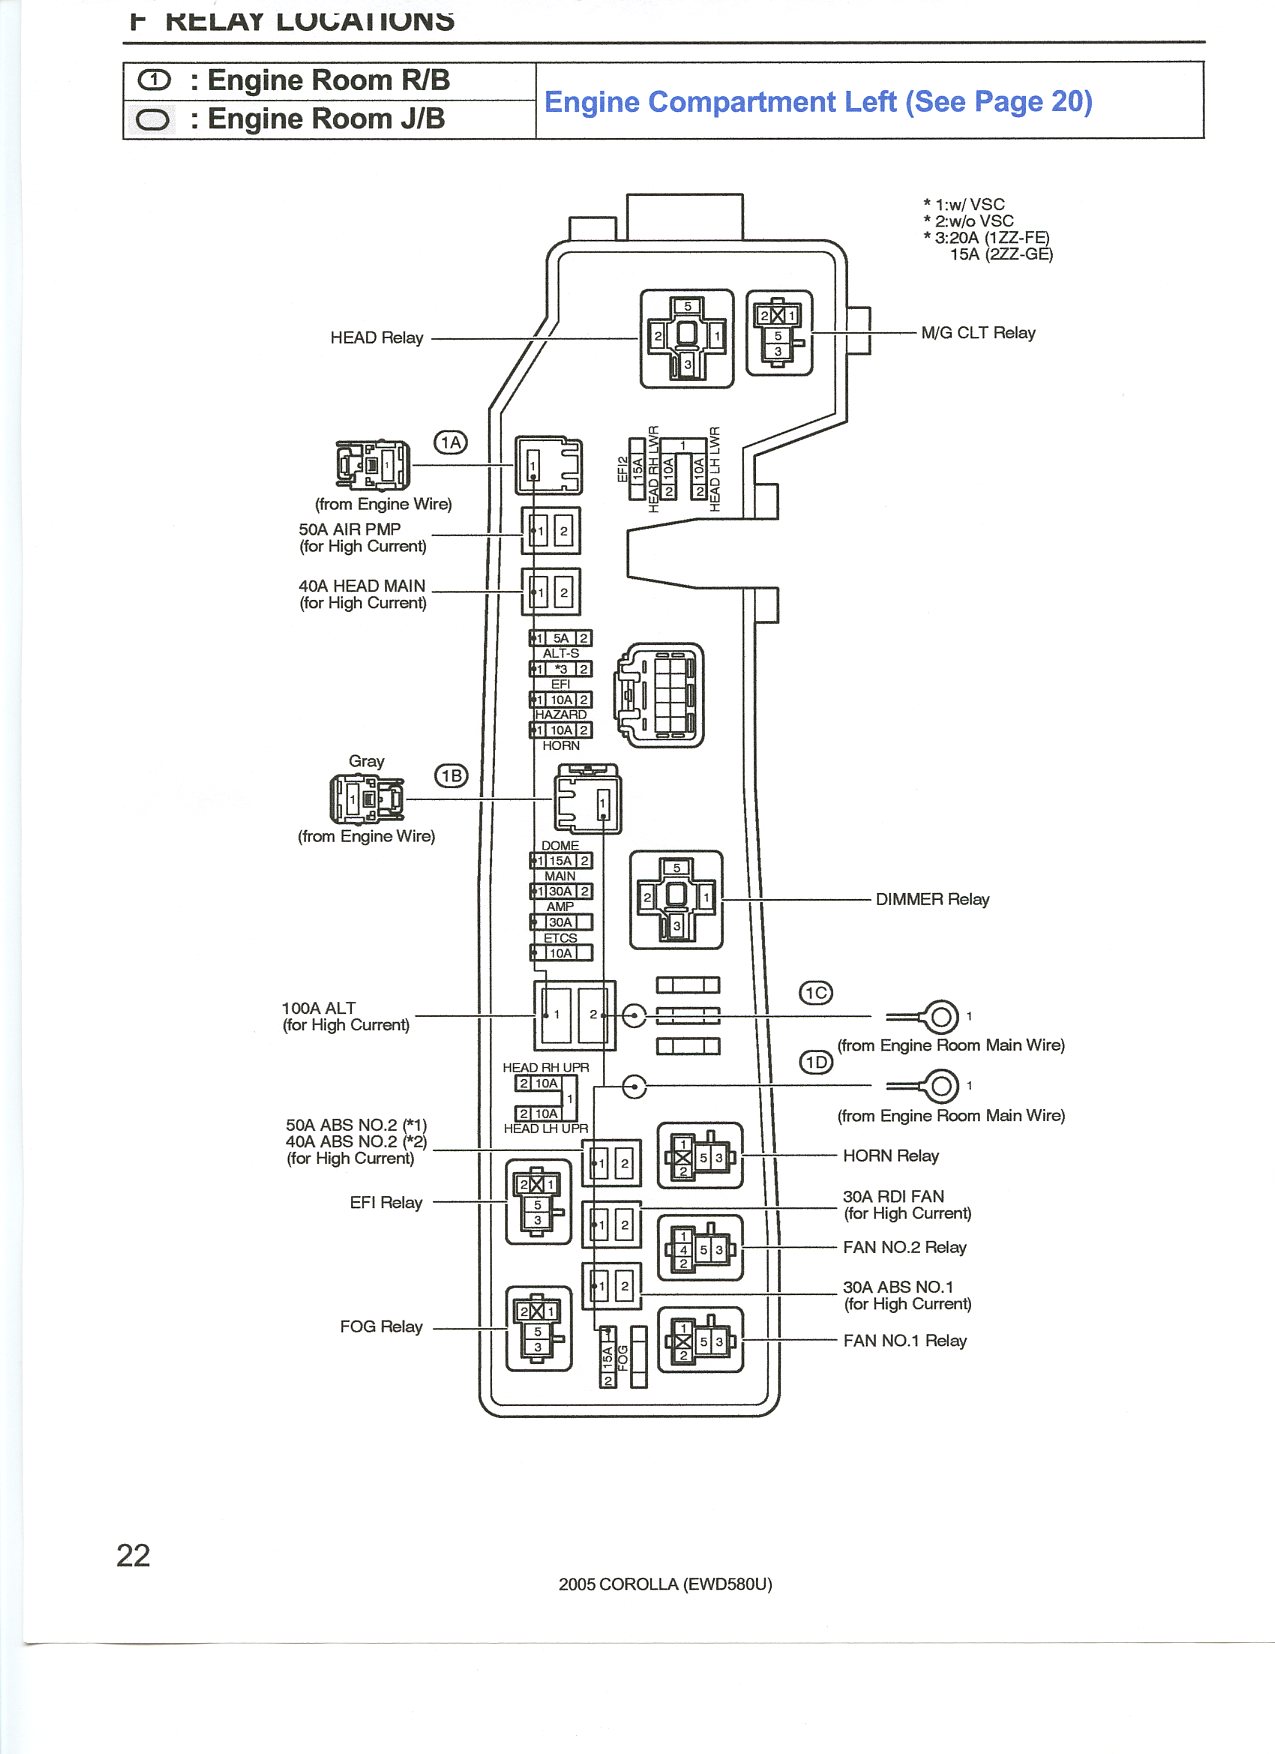 2004 Toyotum Corolla Ce Fuse Box Diagram - Cars Wiring Diagram